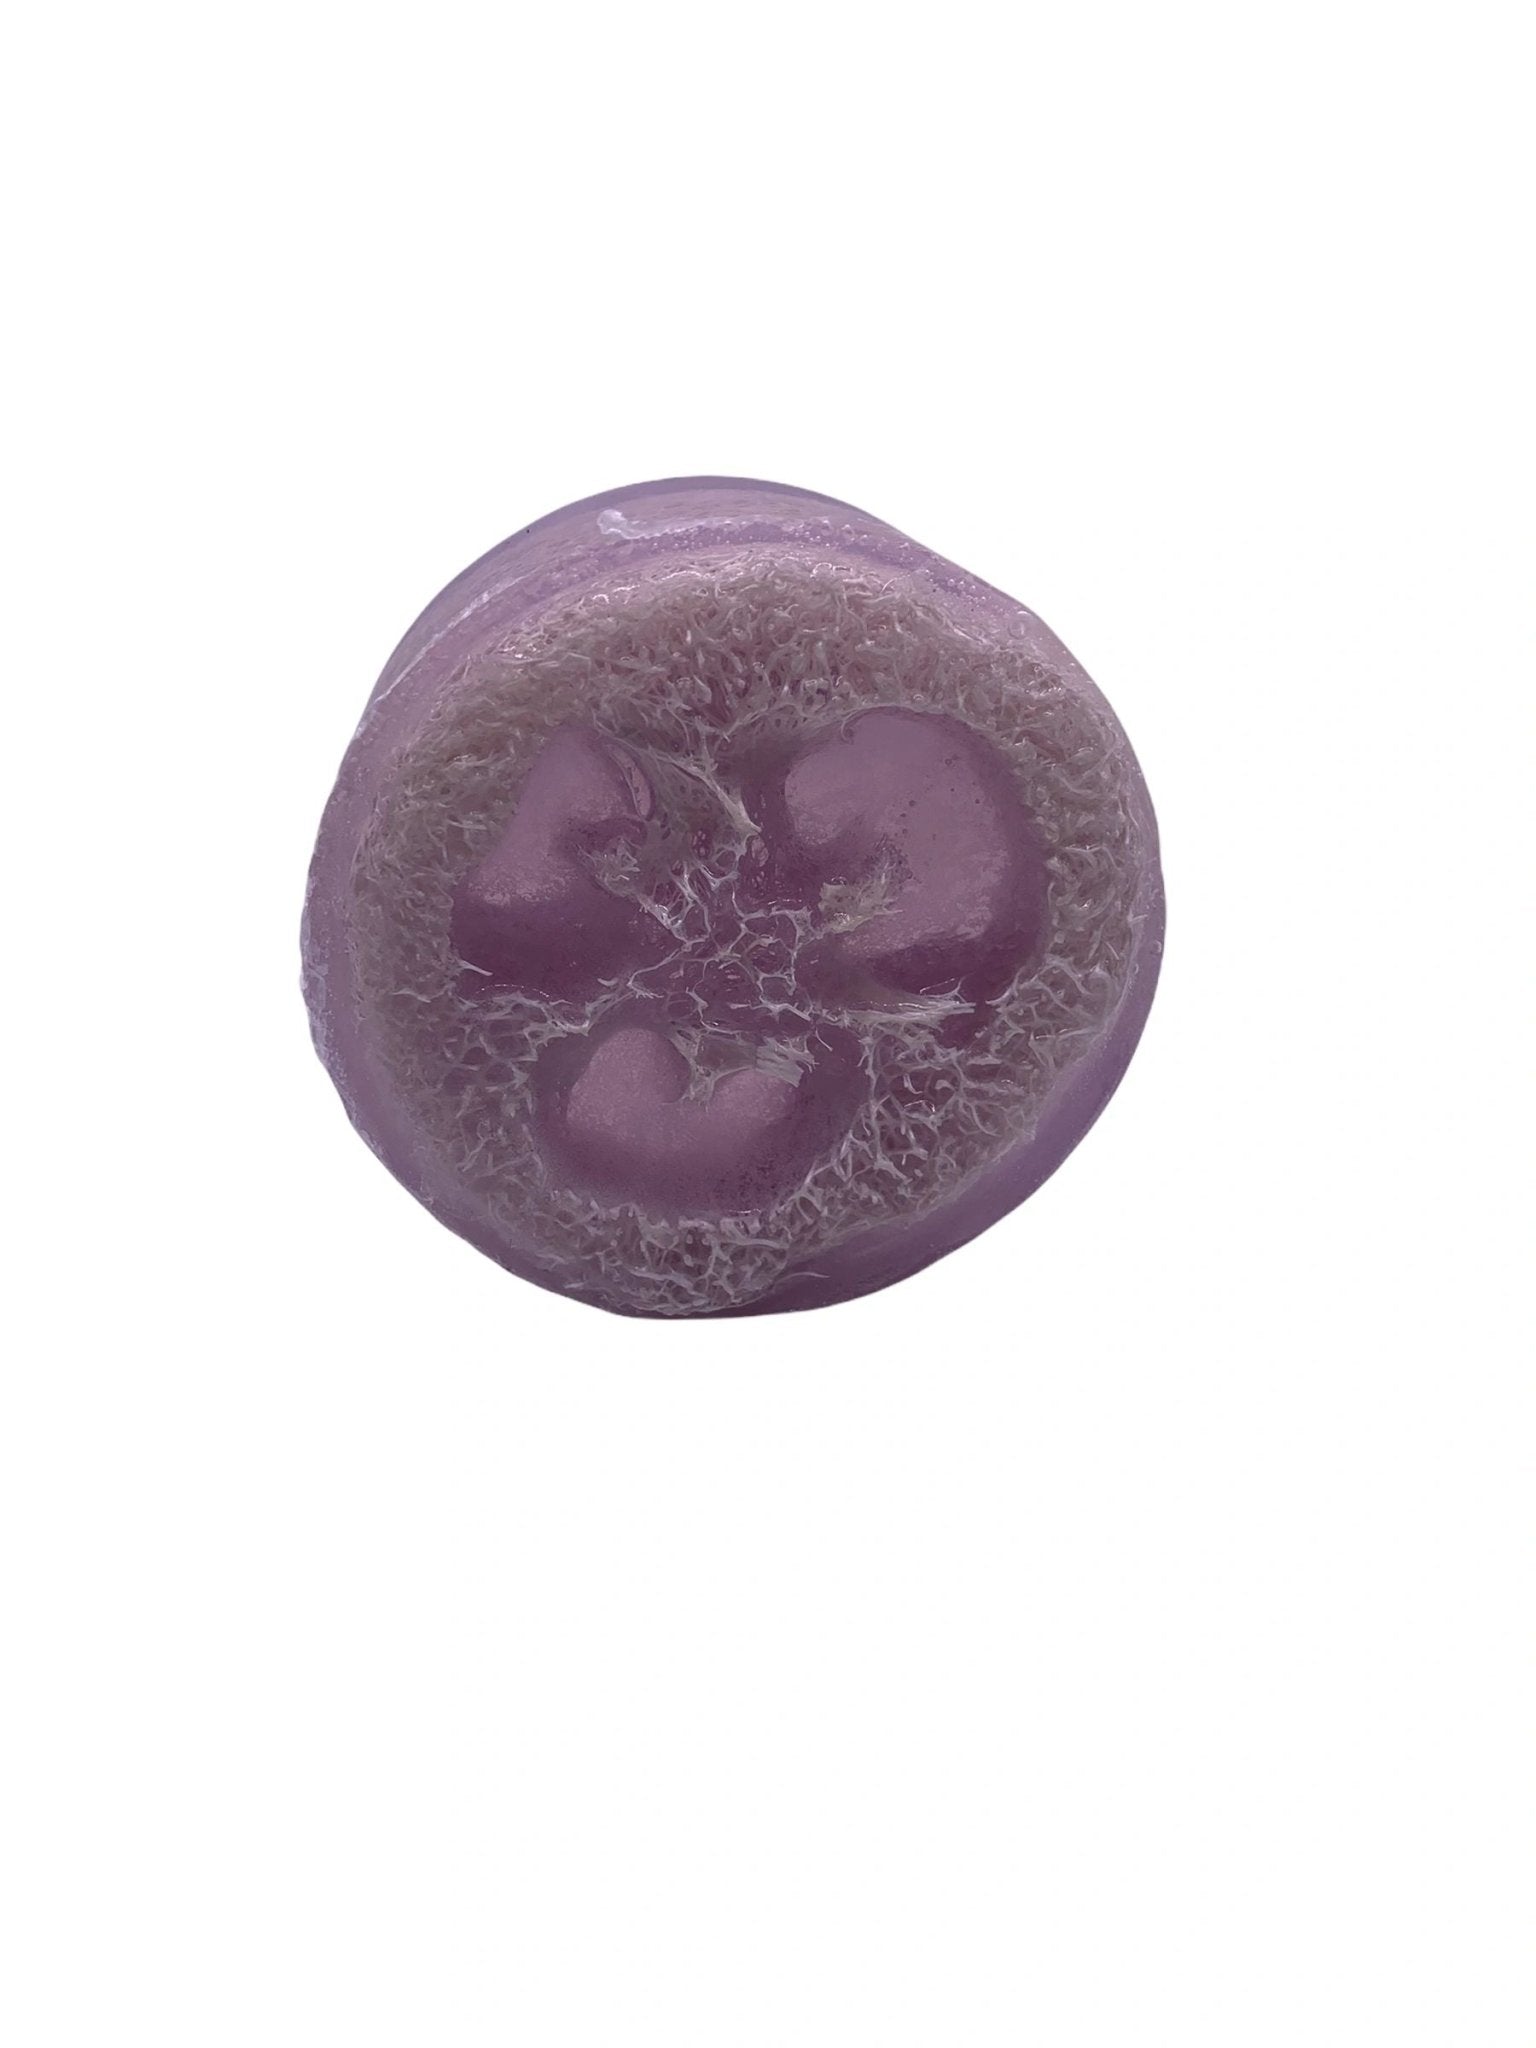 Lavender Loofah Soap Bar - Organically Bath & Beauty